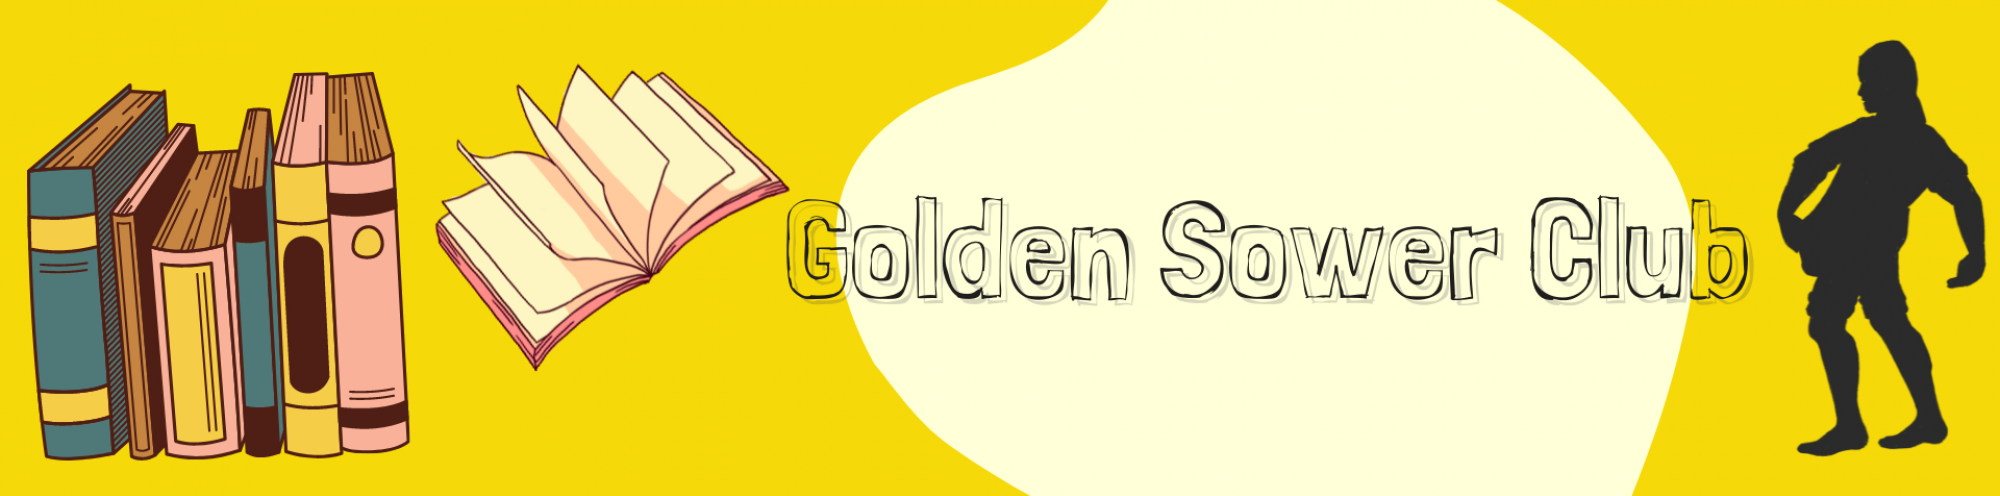 Golden Sower Club banner image